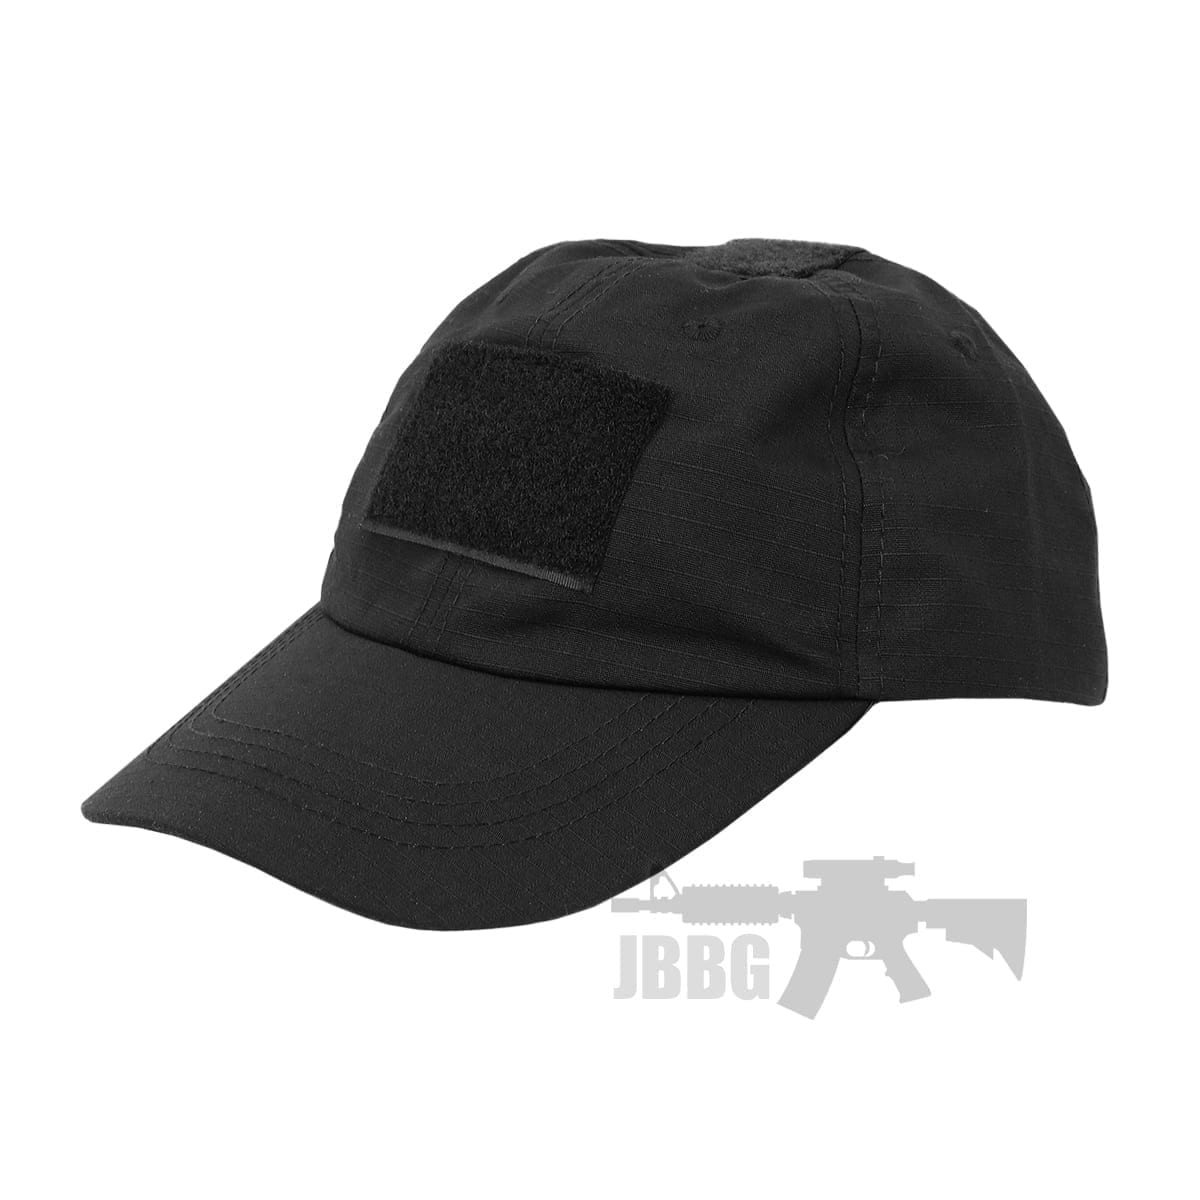 Baseball Tactical Airsoft Cap – Black